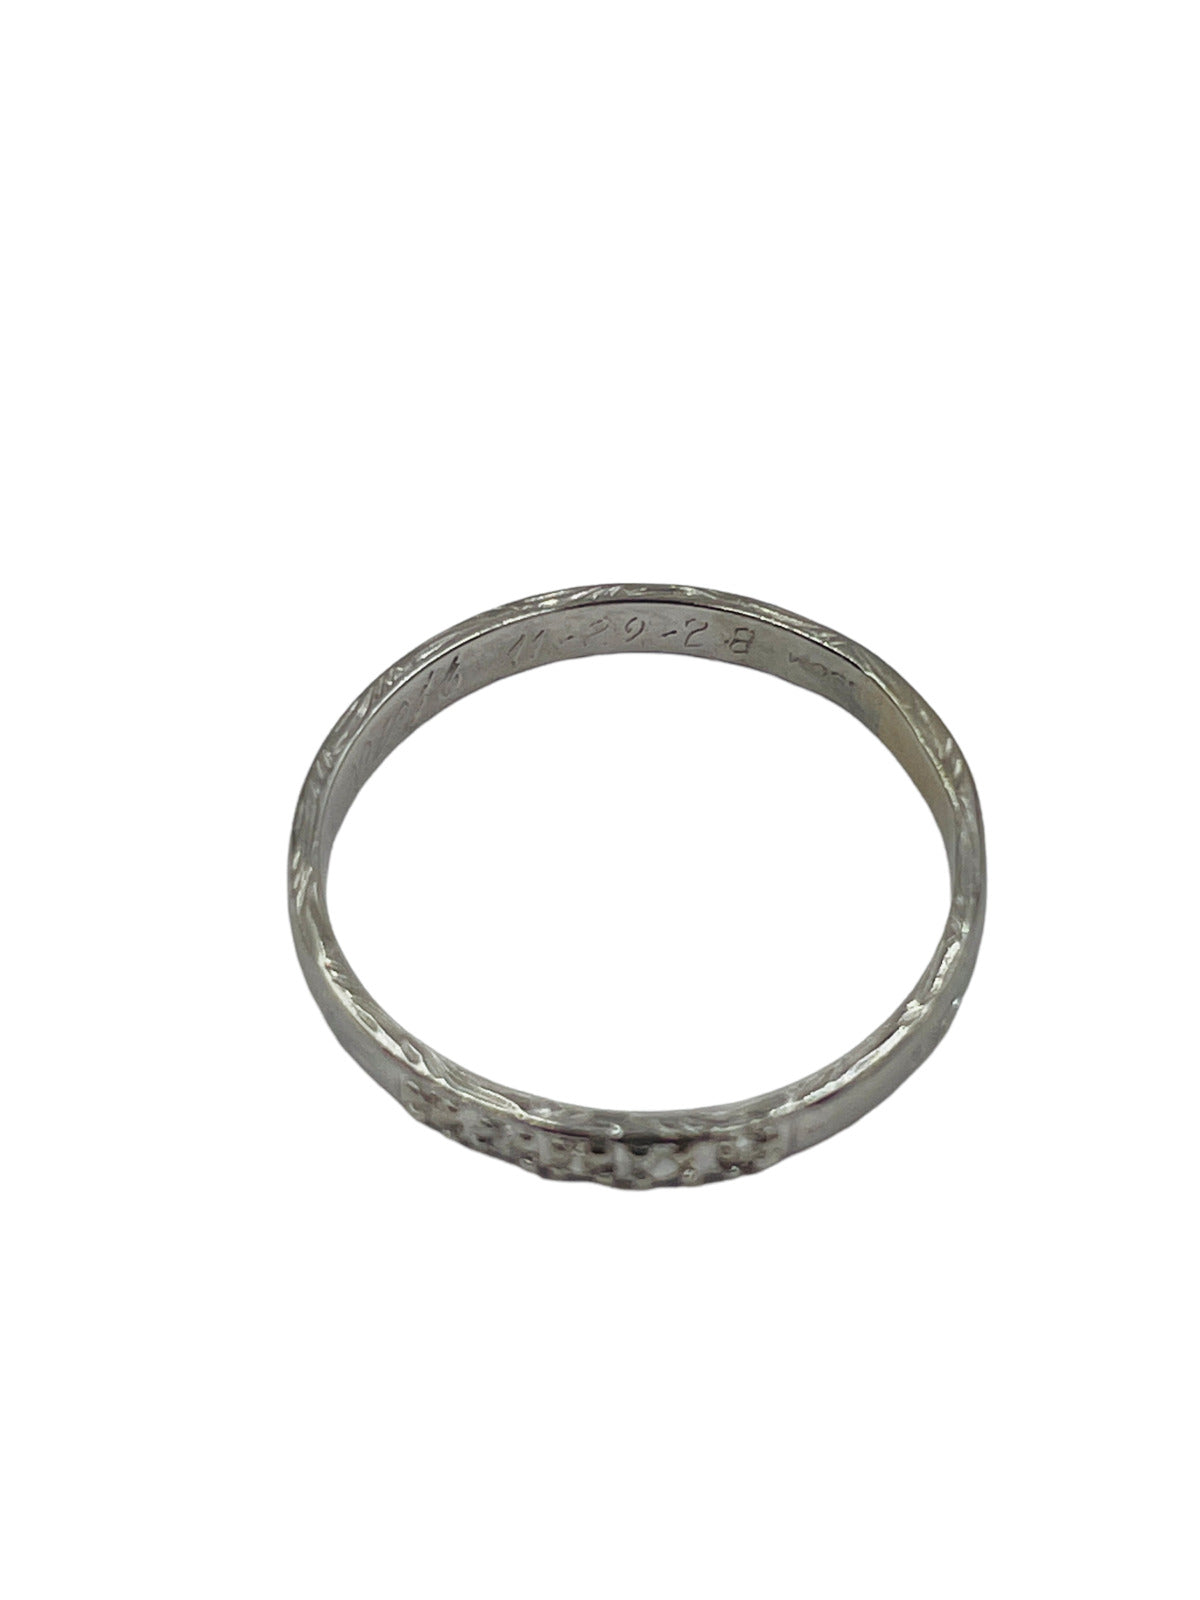 Art Nouveau 18K White Gold Diamond Band Ring 2.4mm